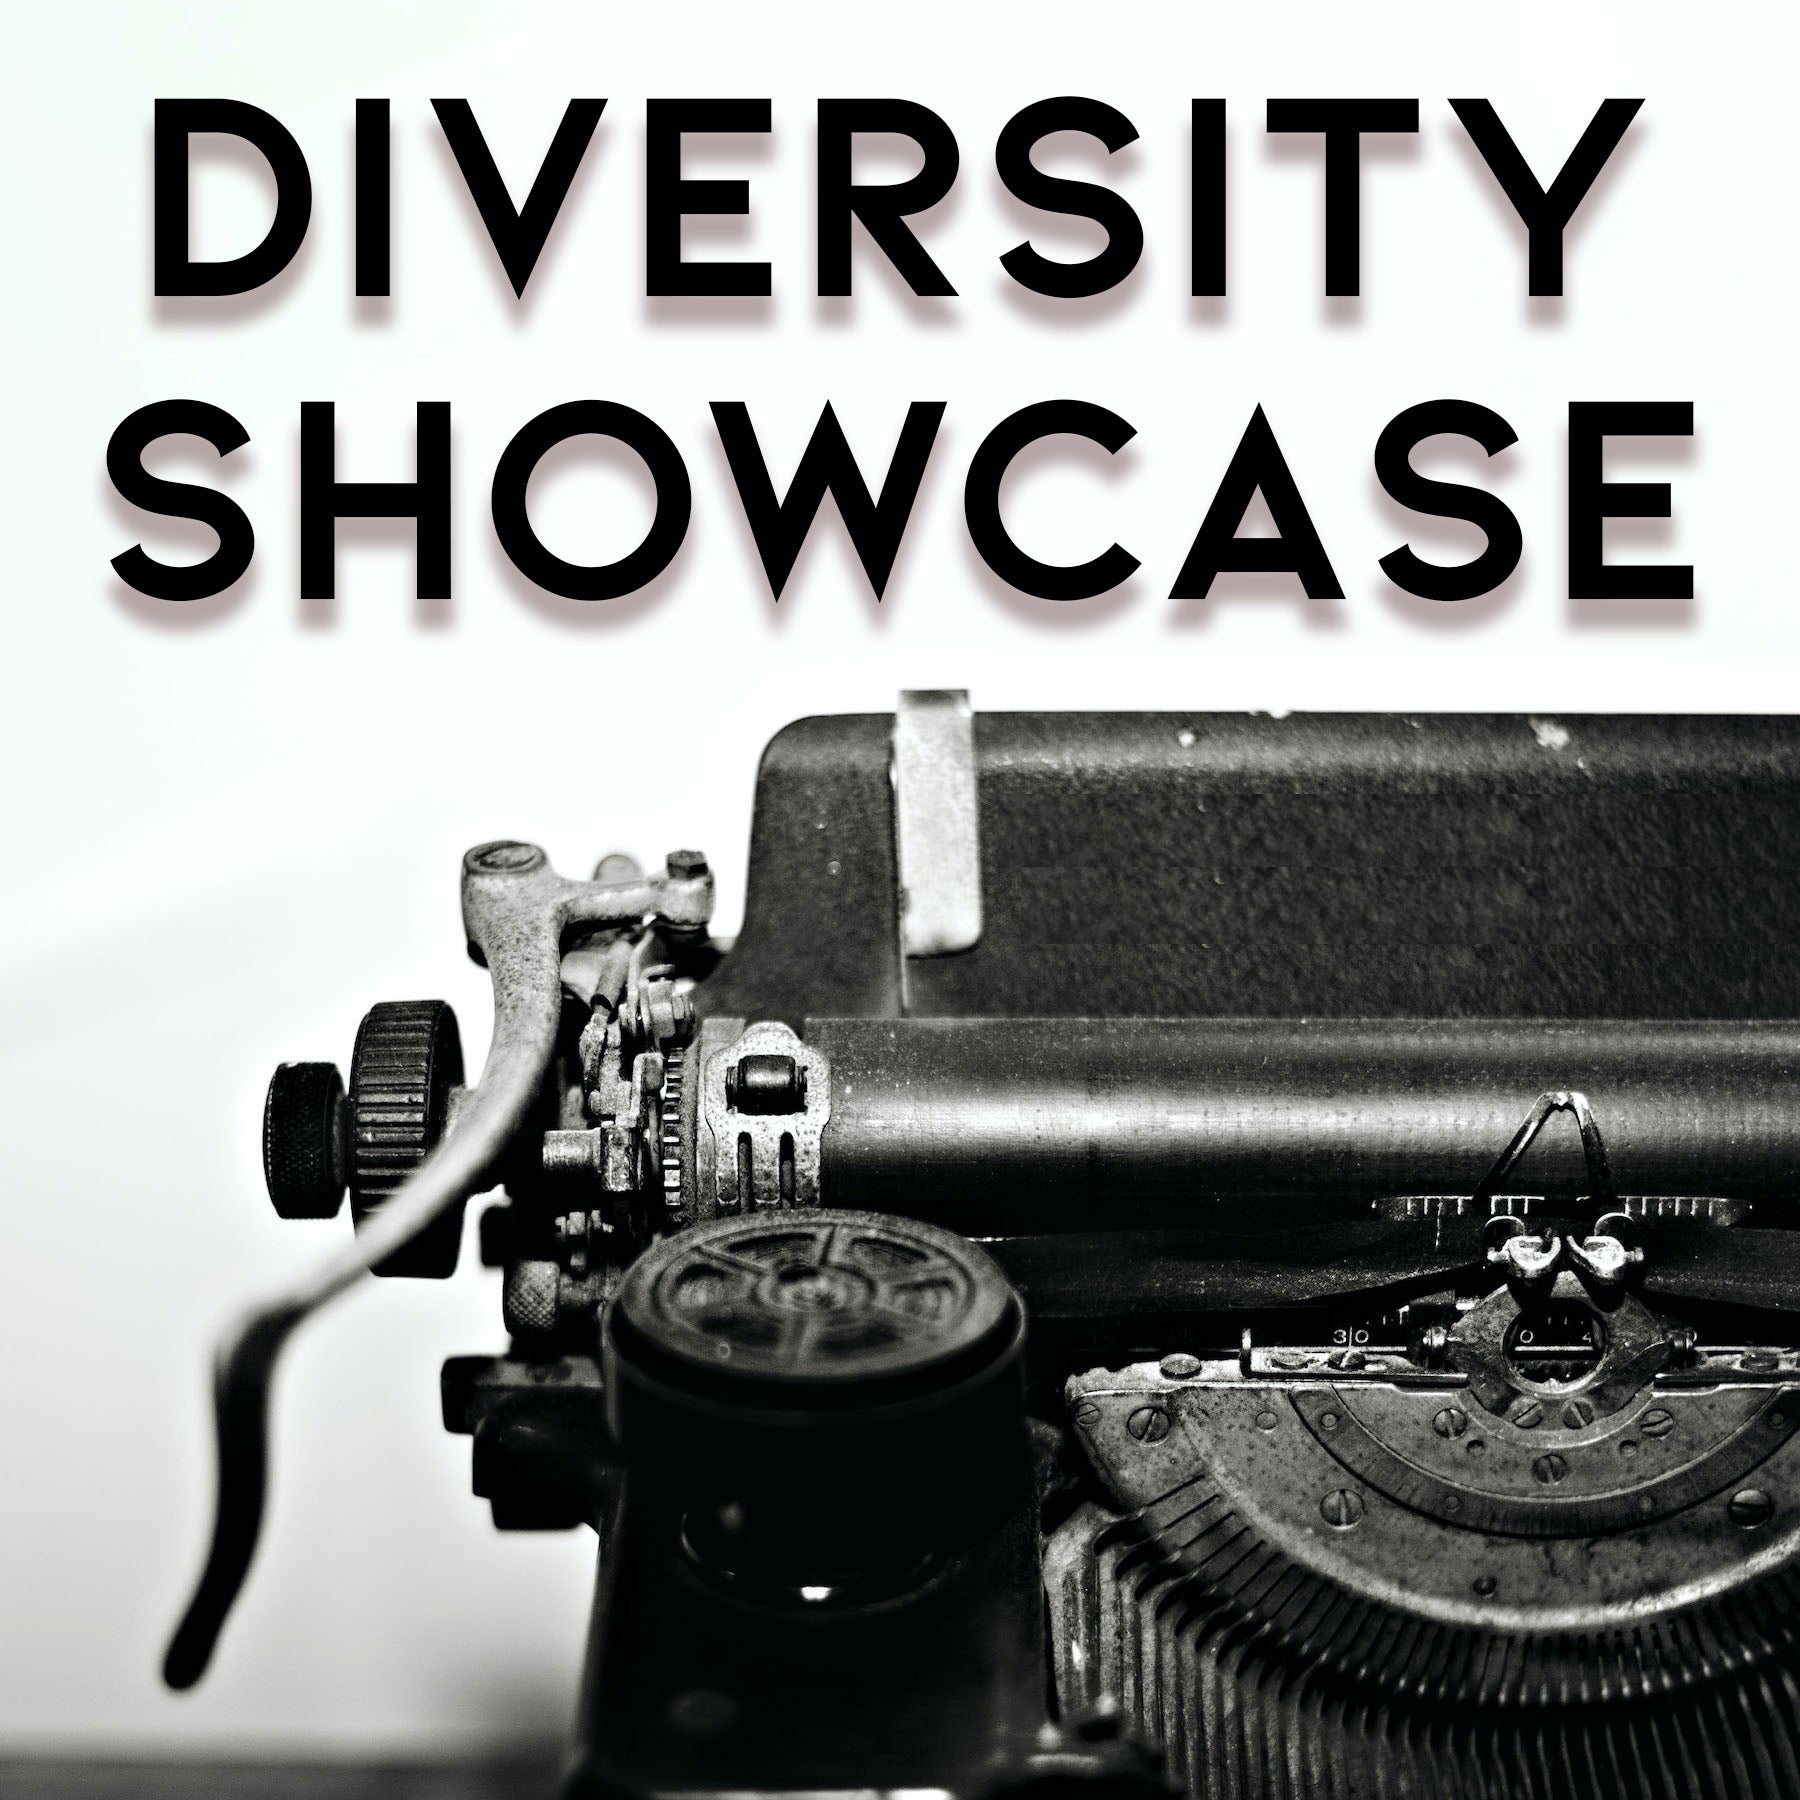 Diversity Showcase Icon - Vintage Typewriter